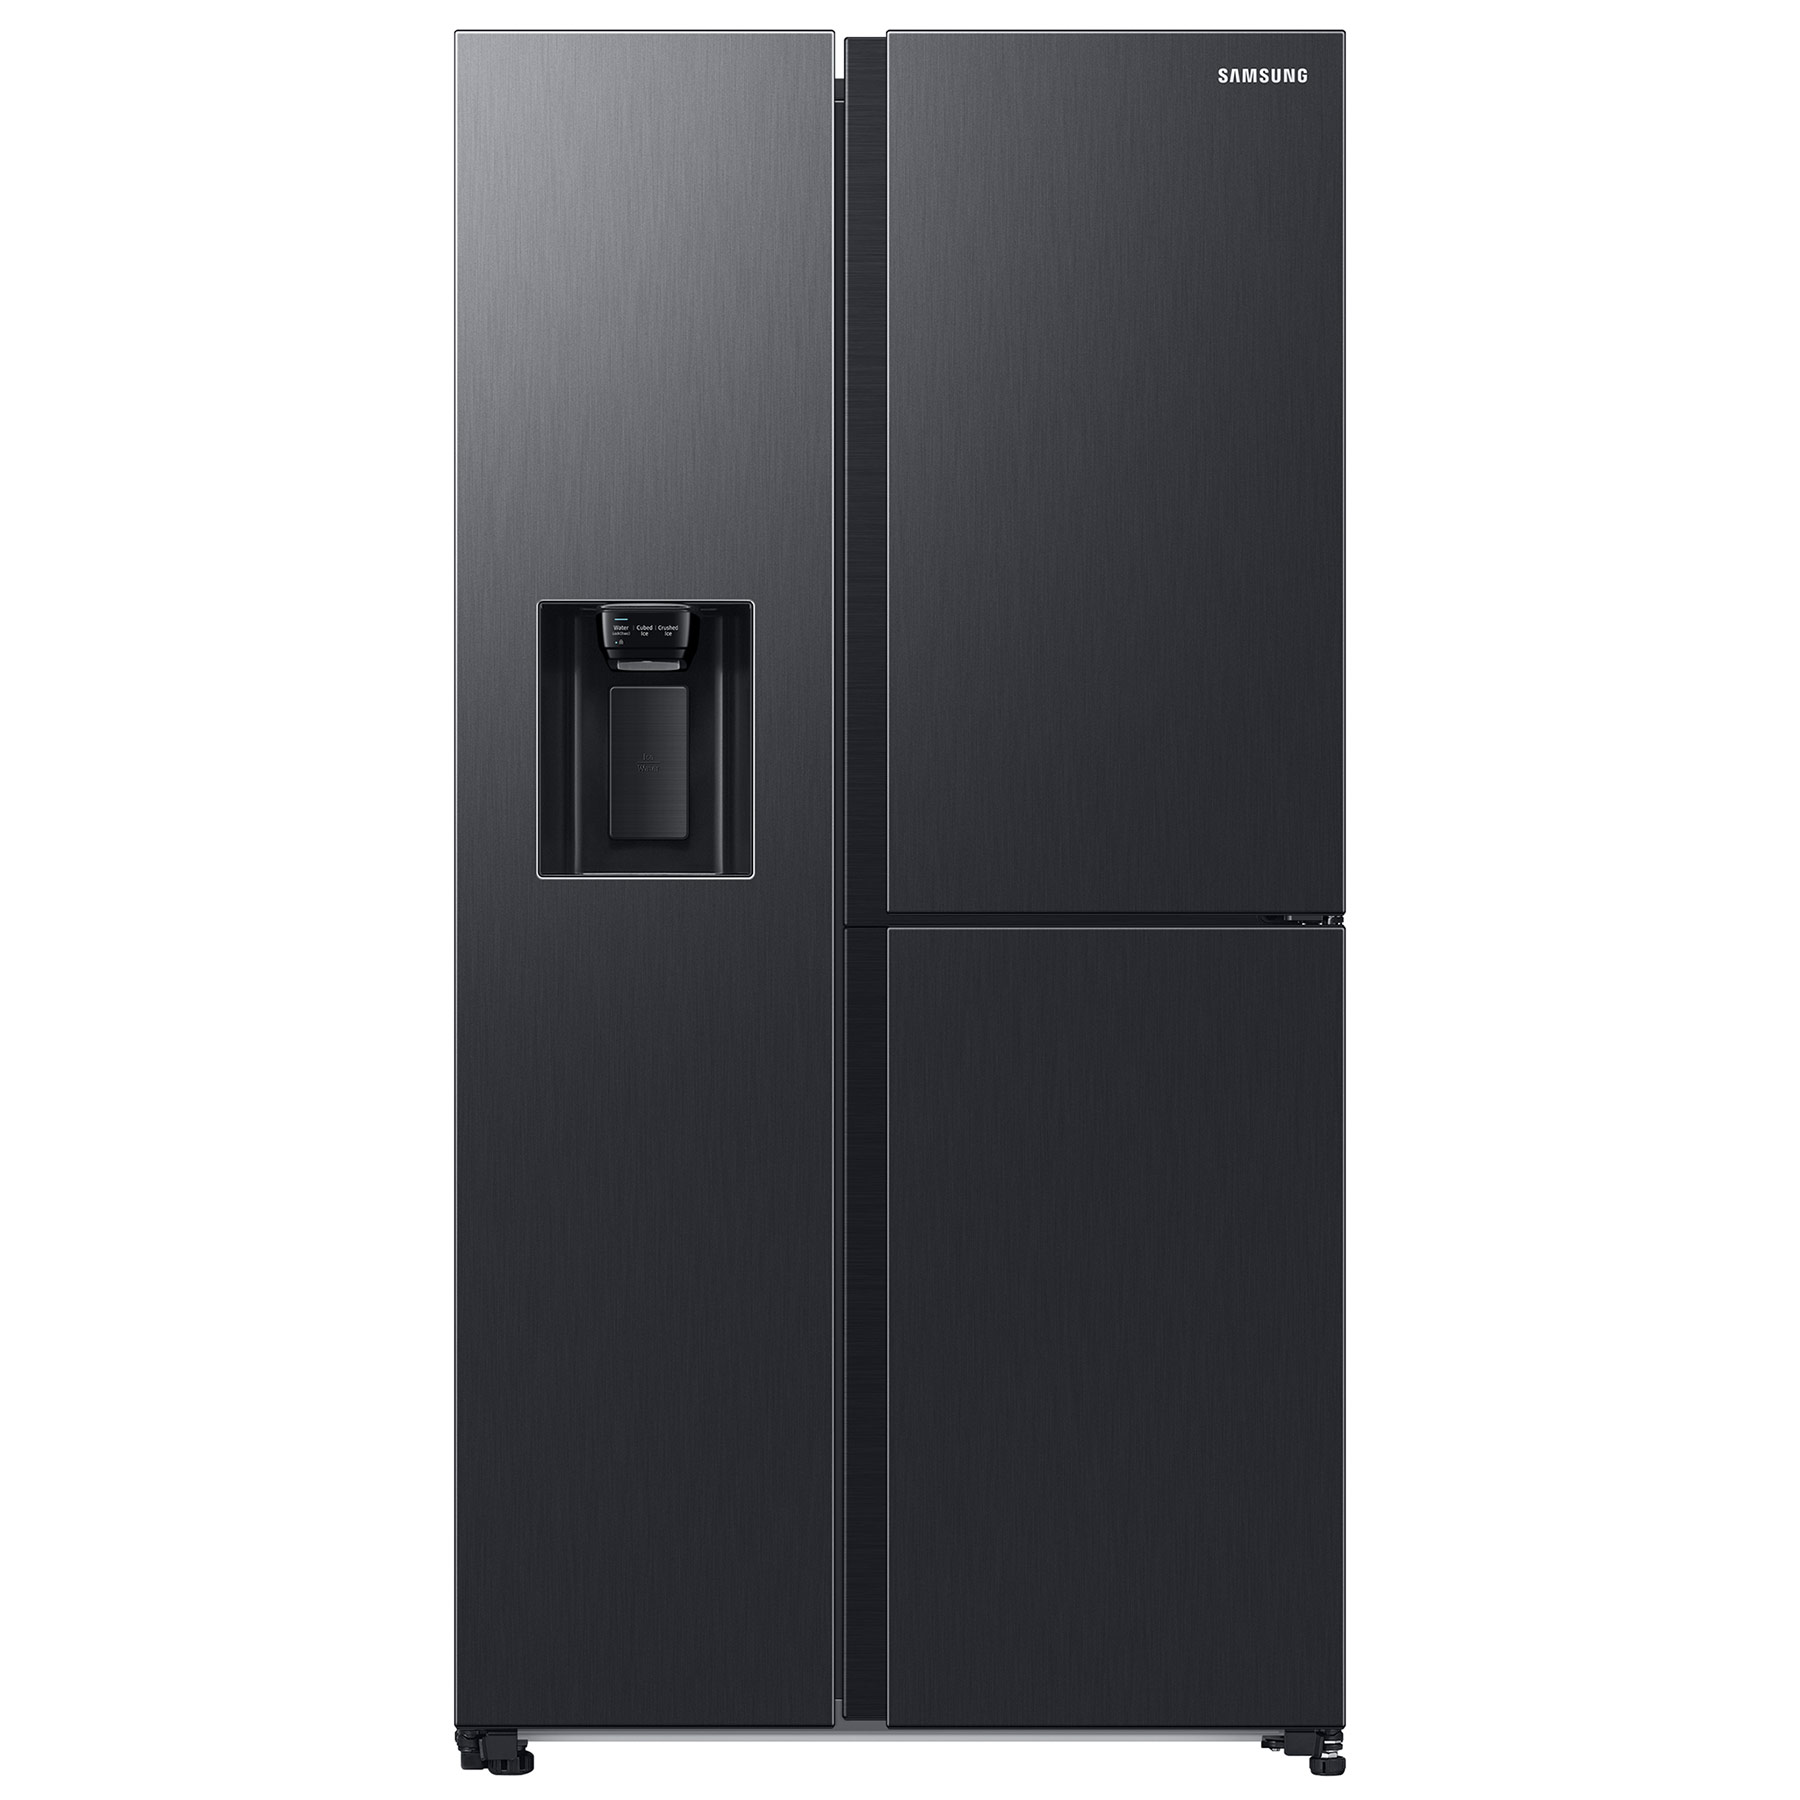 Image of Samsung RH68B8830B1 American Fridge Freezer in Black PL I W F Rated